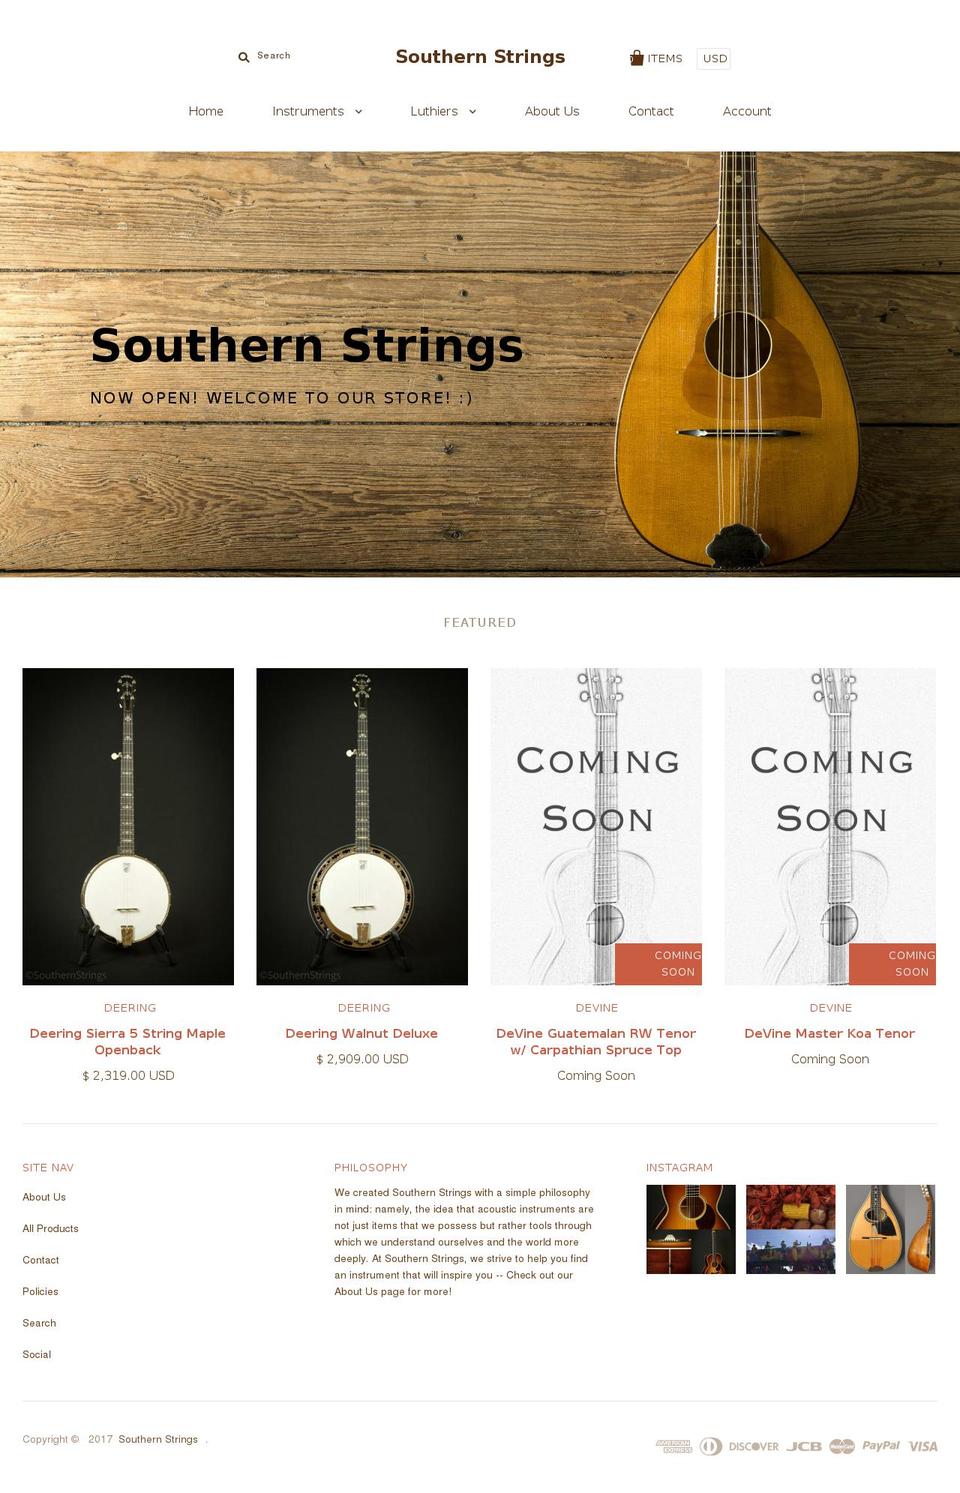 southernstrings.com shopify website screenshot